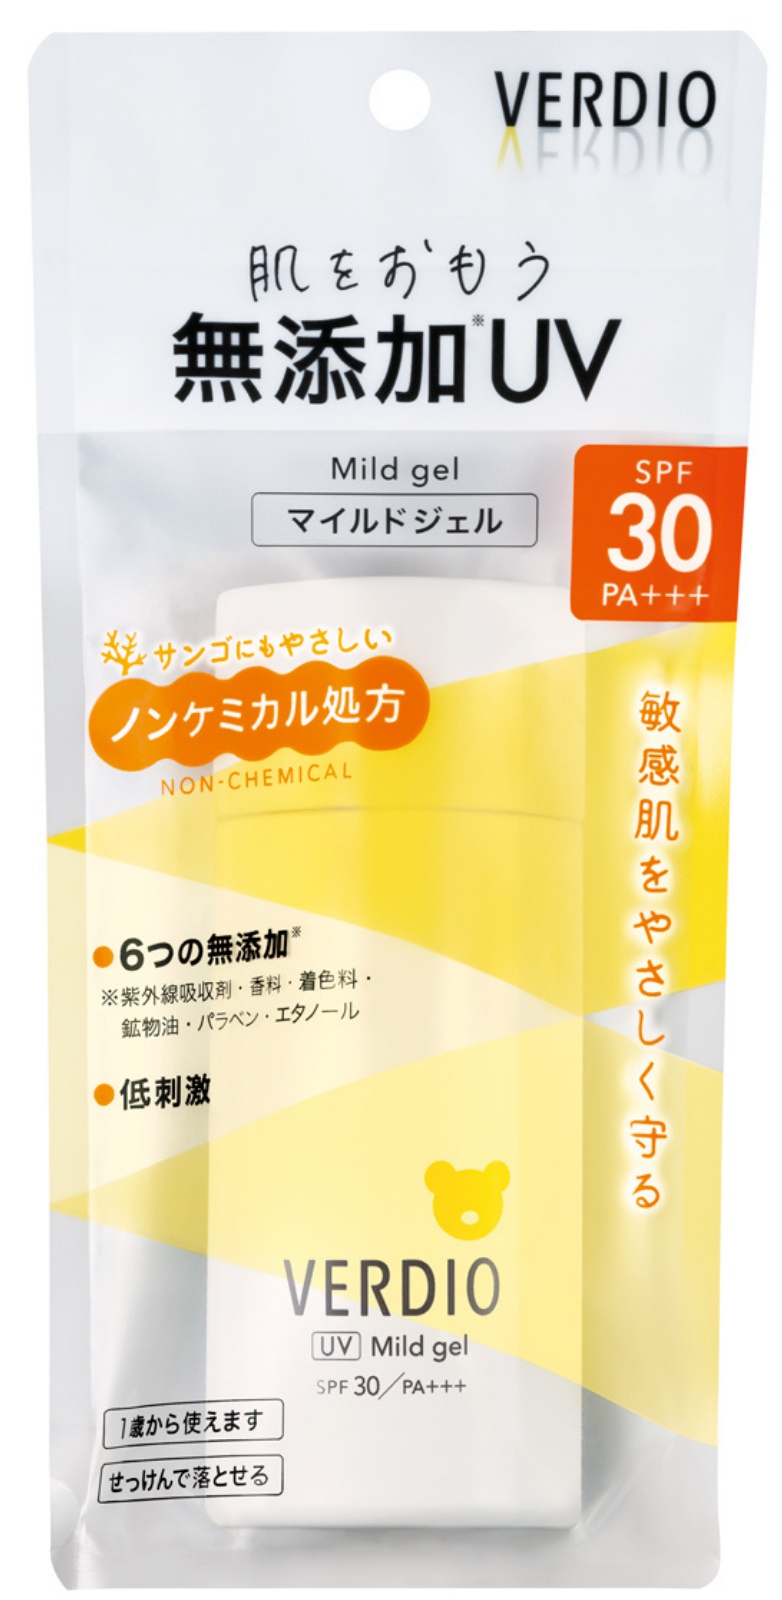 OMI Menturm Verdio UV Mild Gel Sunscreen SPF30 Physical Sunscreen For Kids And Sensitive Skin